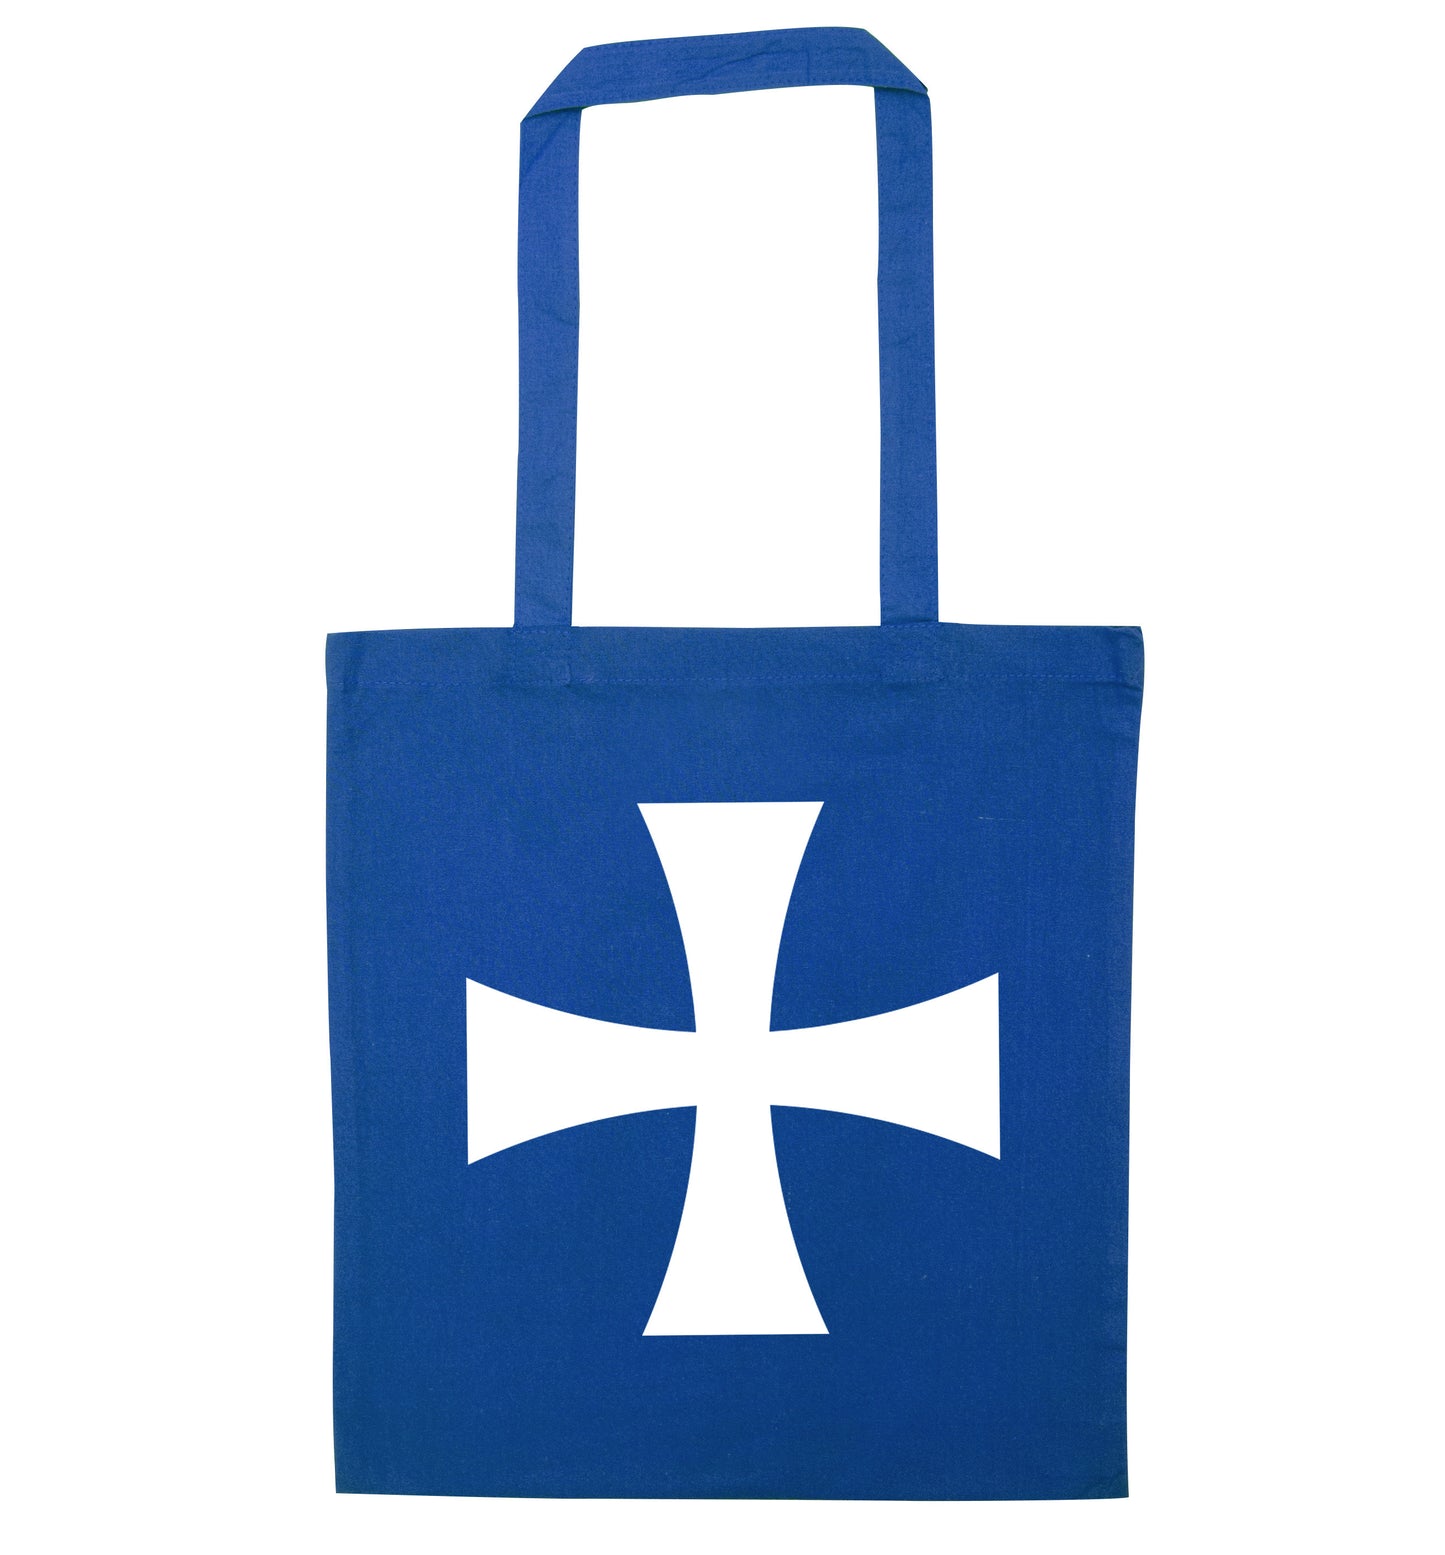 Knights Templar cross blue tote bag